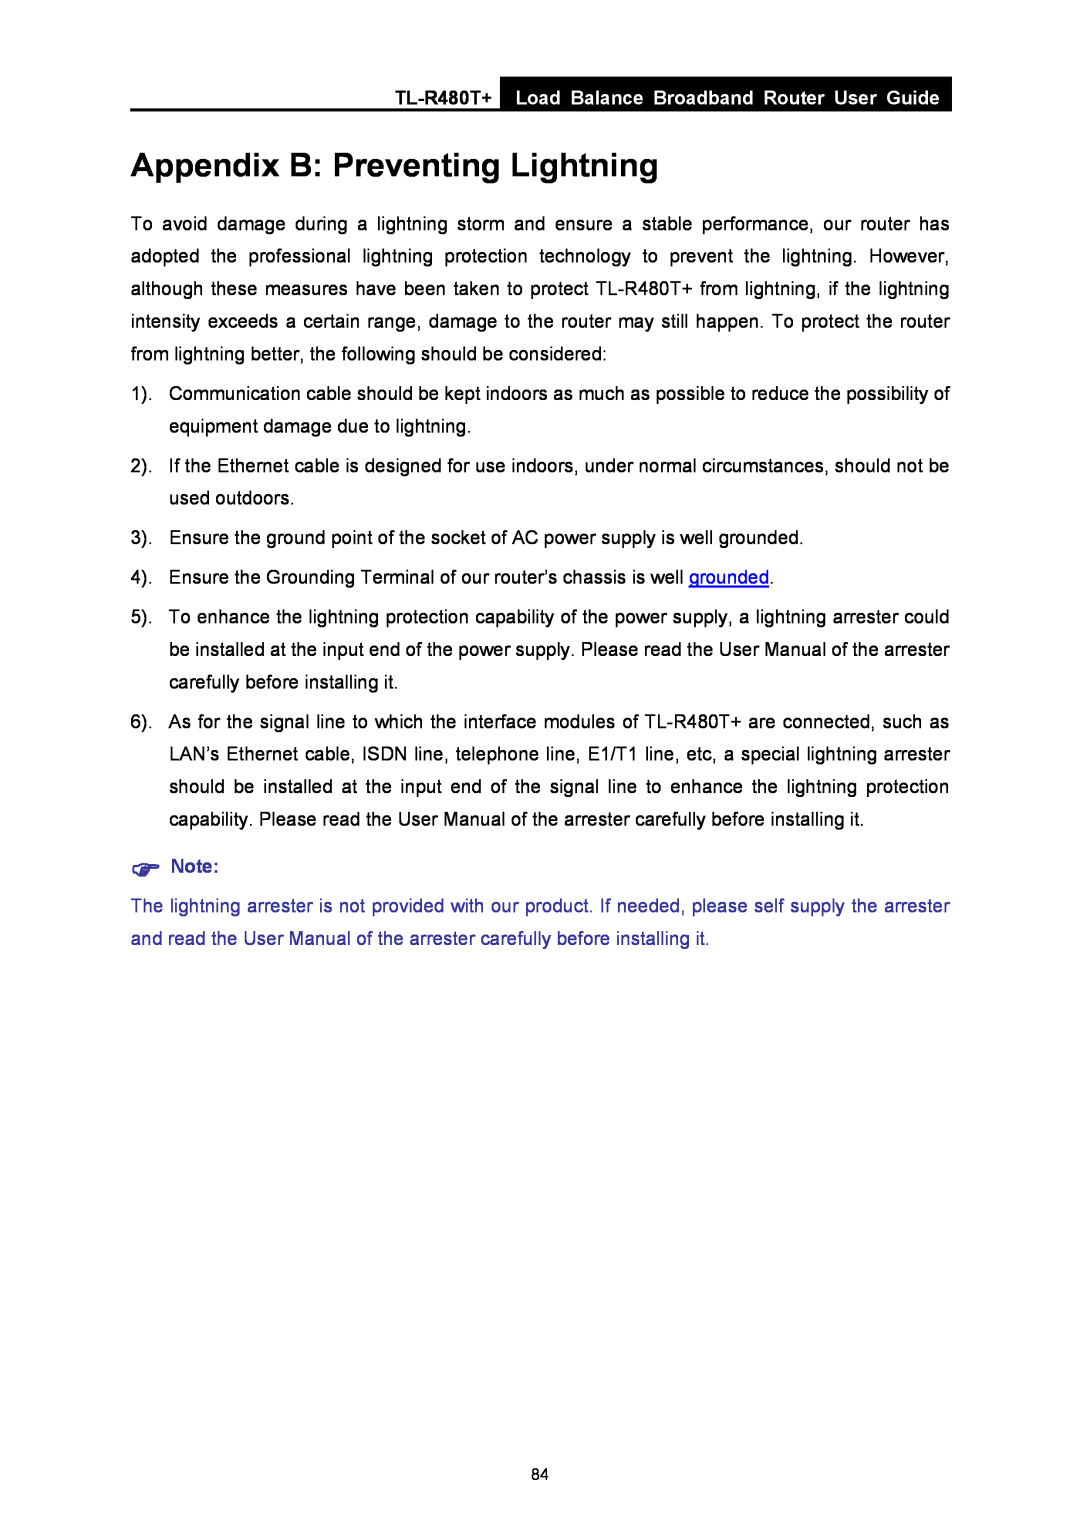 TP-Link TL-R480T+ manual Appendix B Preventing Lightning, Load Balance Broadband Router User Guide 